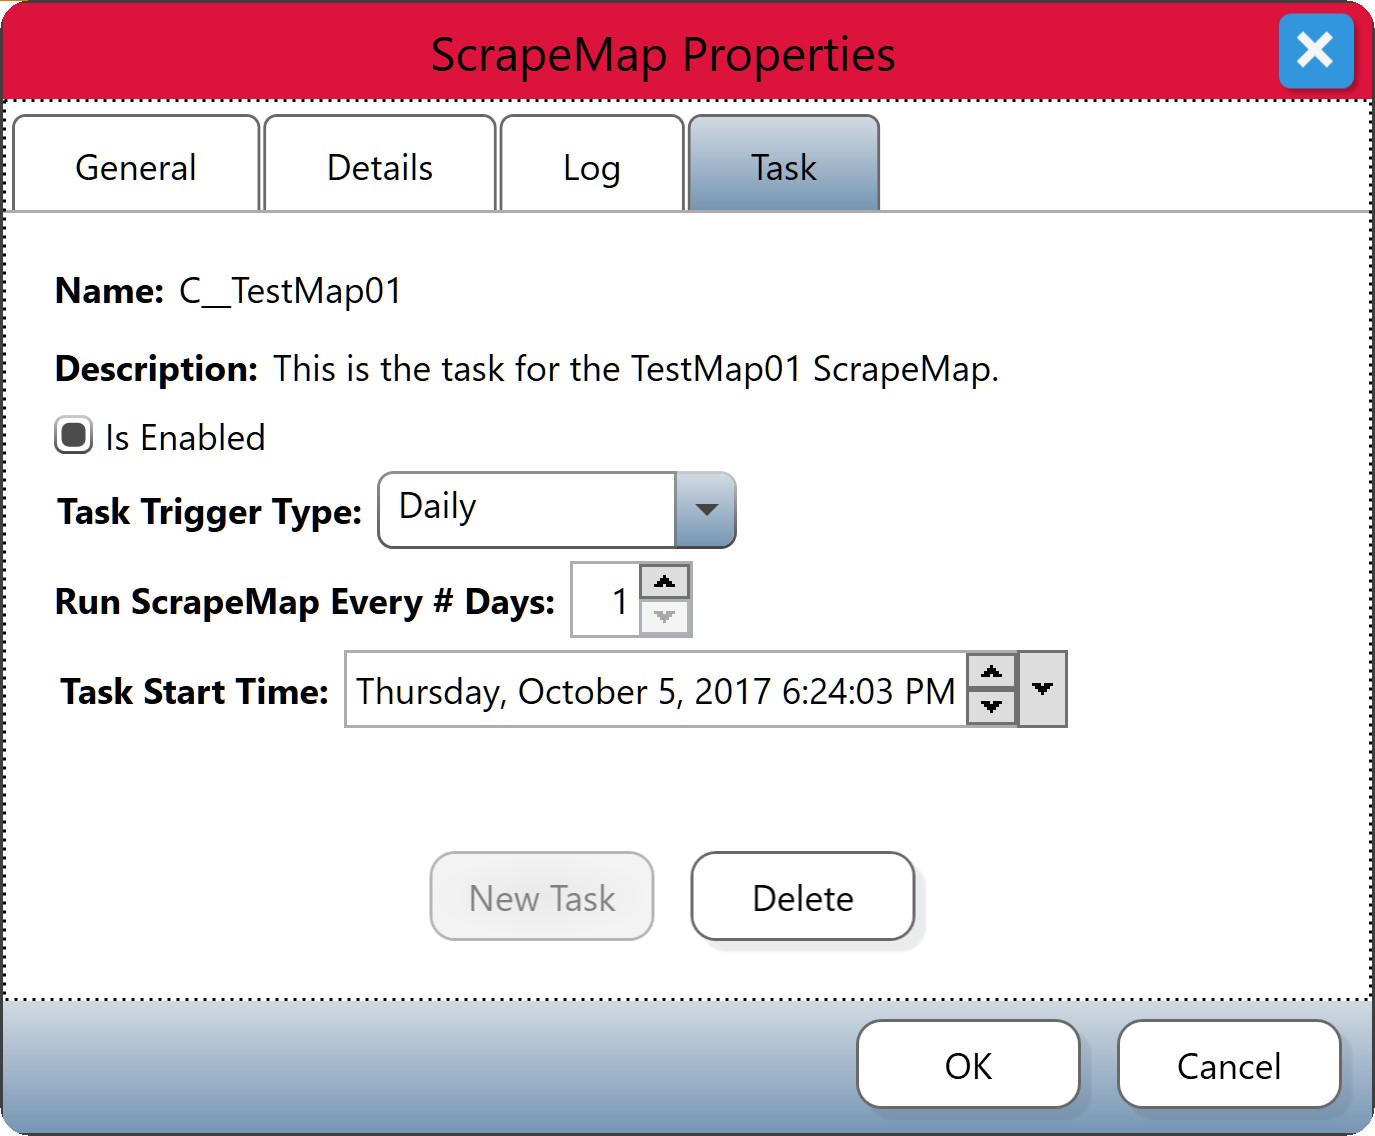 The Task Tab of the ScrapeMap Properties Dialog